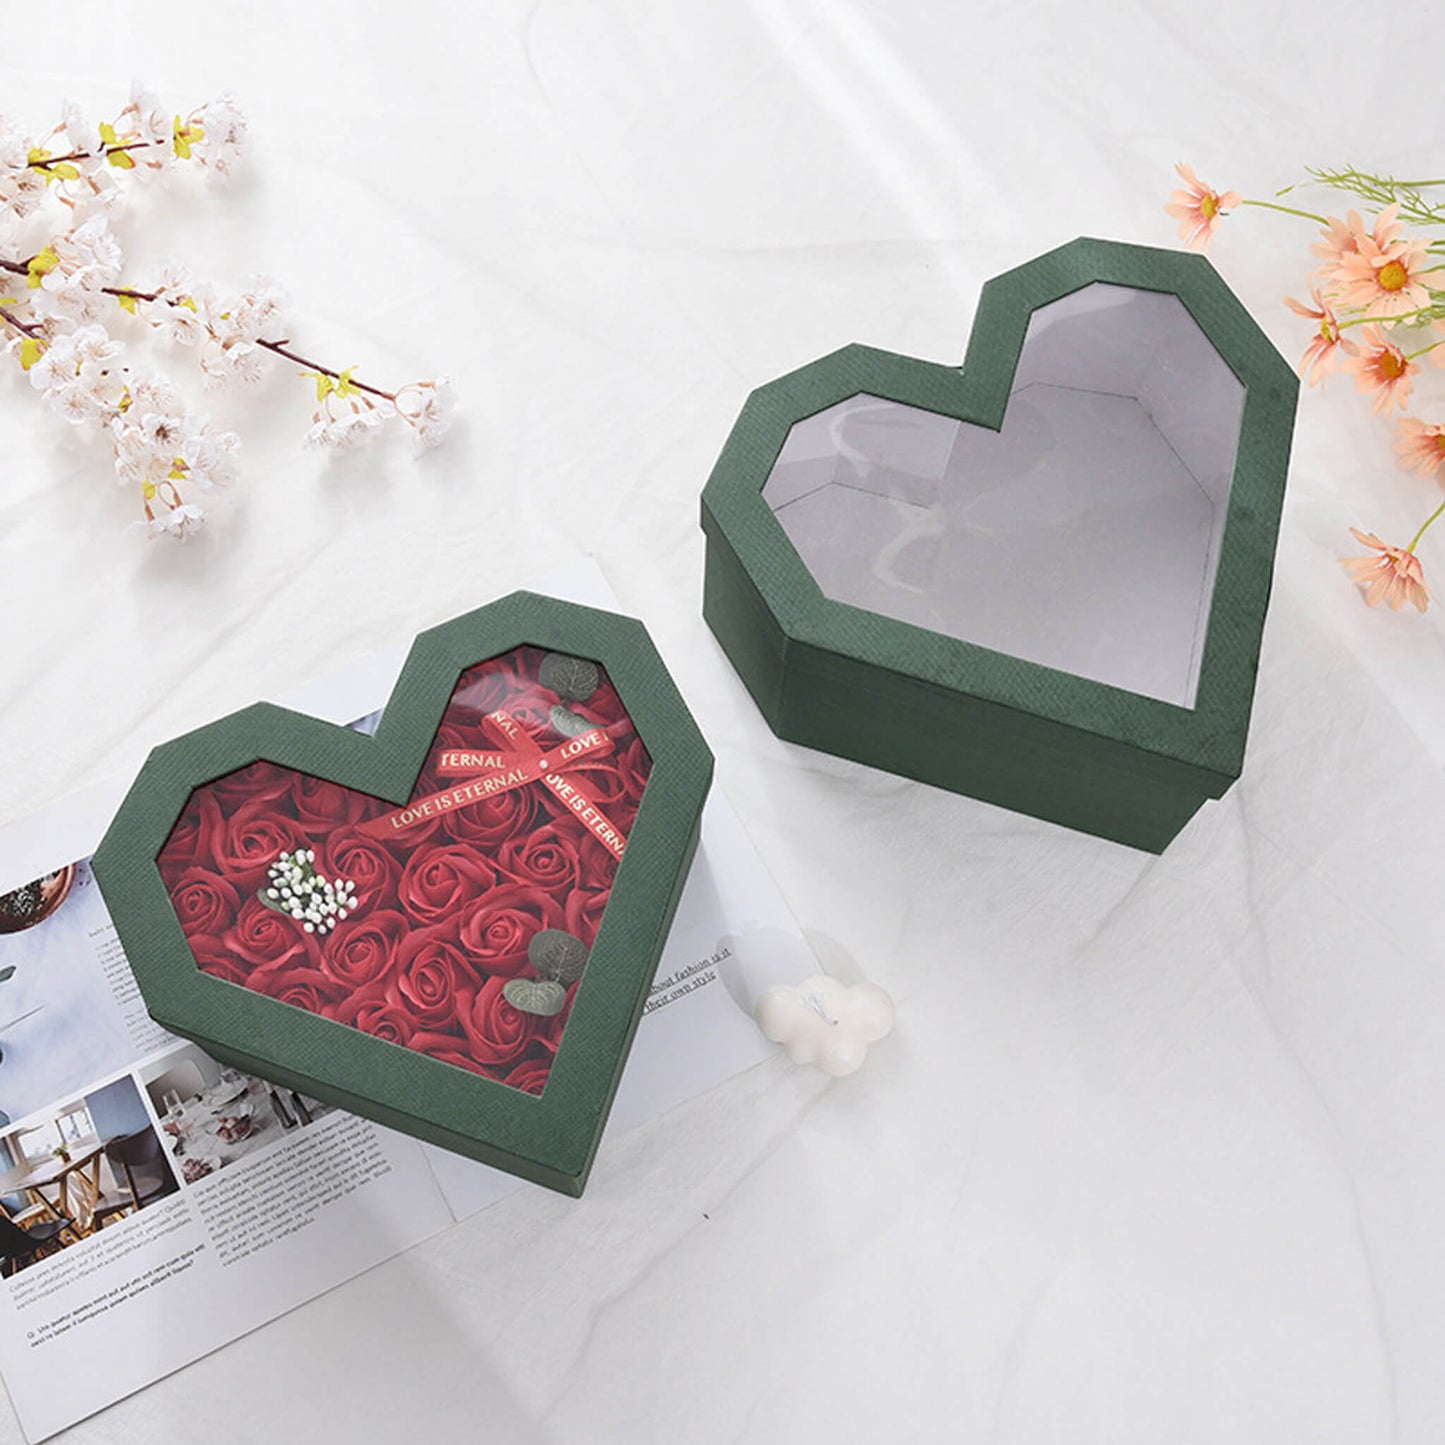 Window Heart Rose Gift Box Sets - Bulk Lots